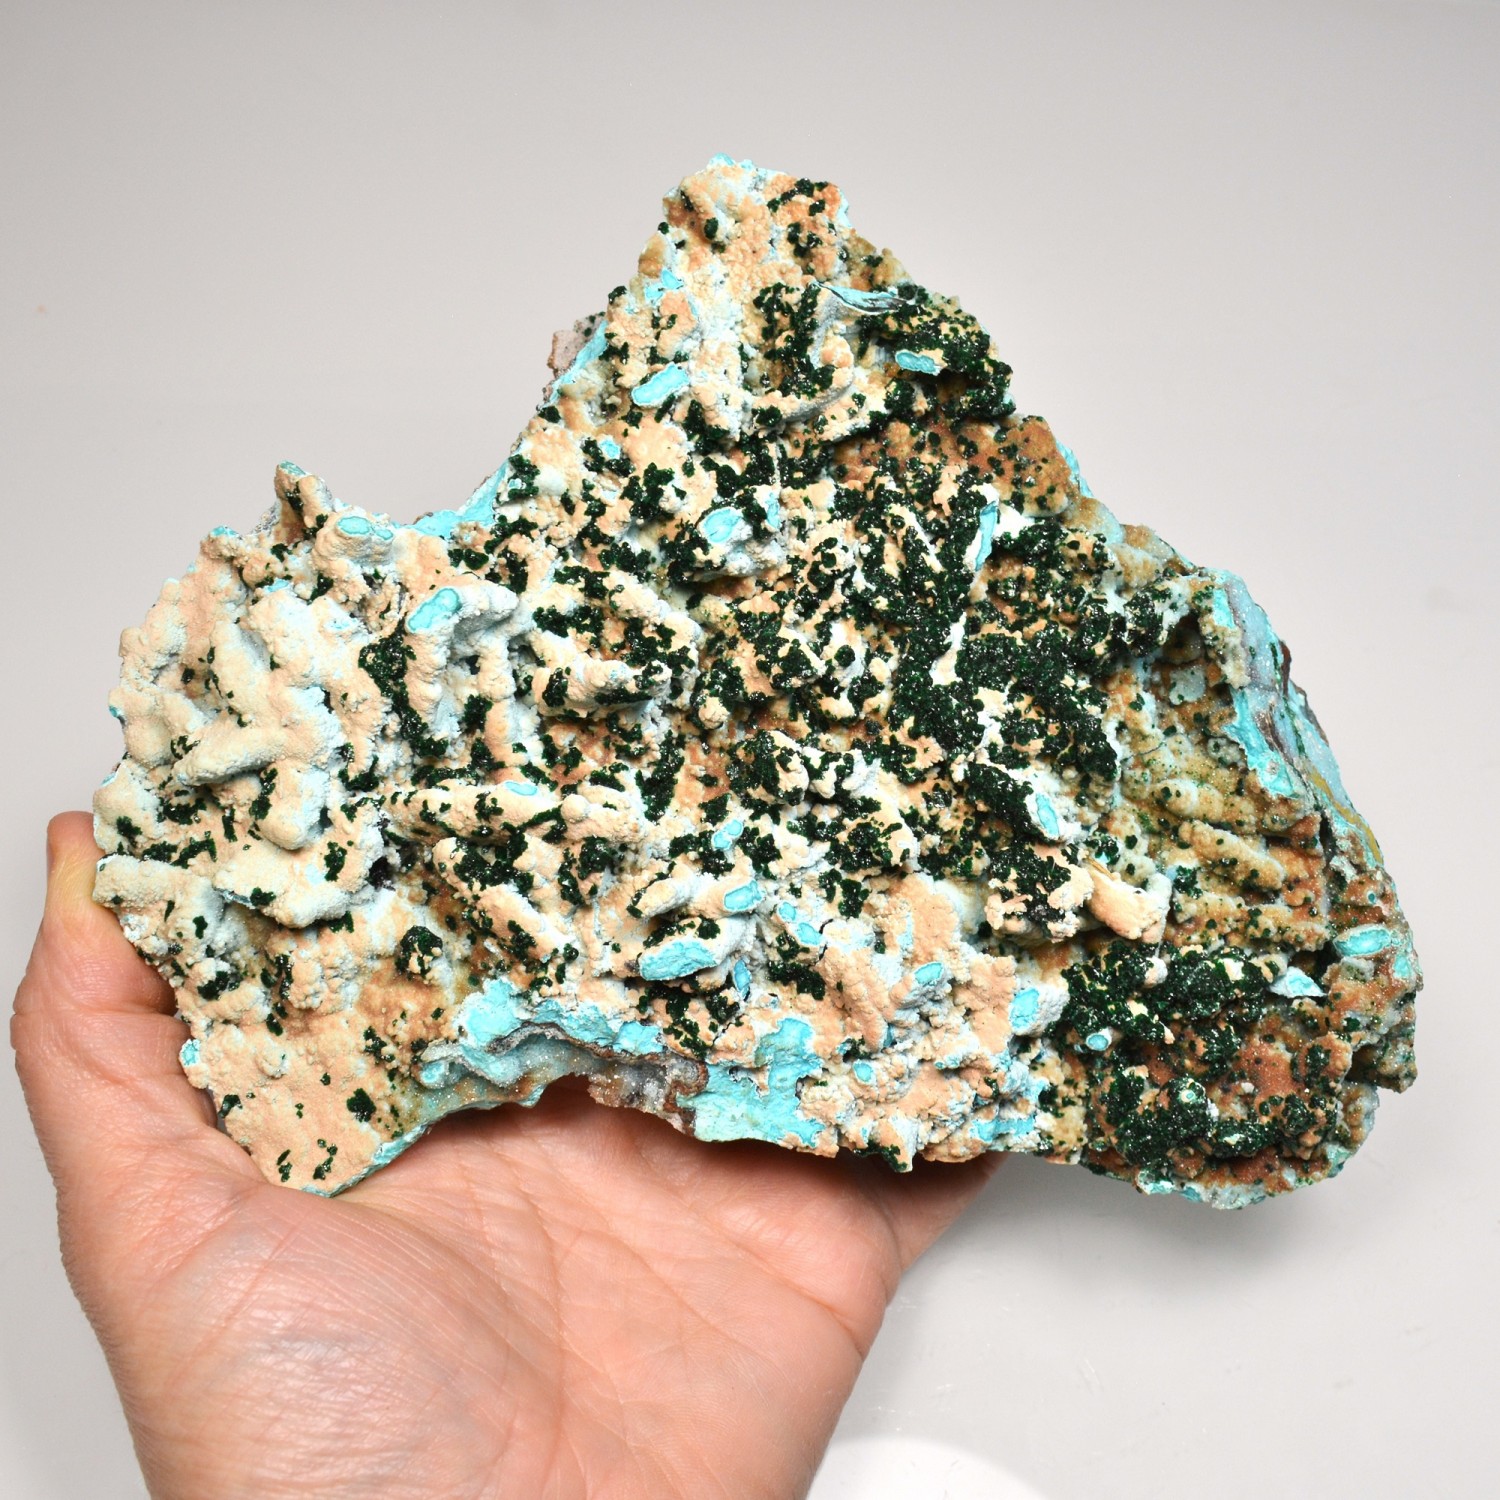 Chrysocole psm after azurite( ?), malachite and quartz - Tenke-Fungurume mine, Katanga, DR Congo